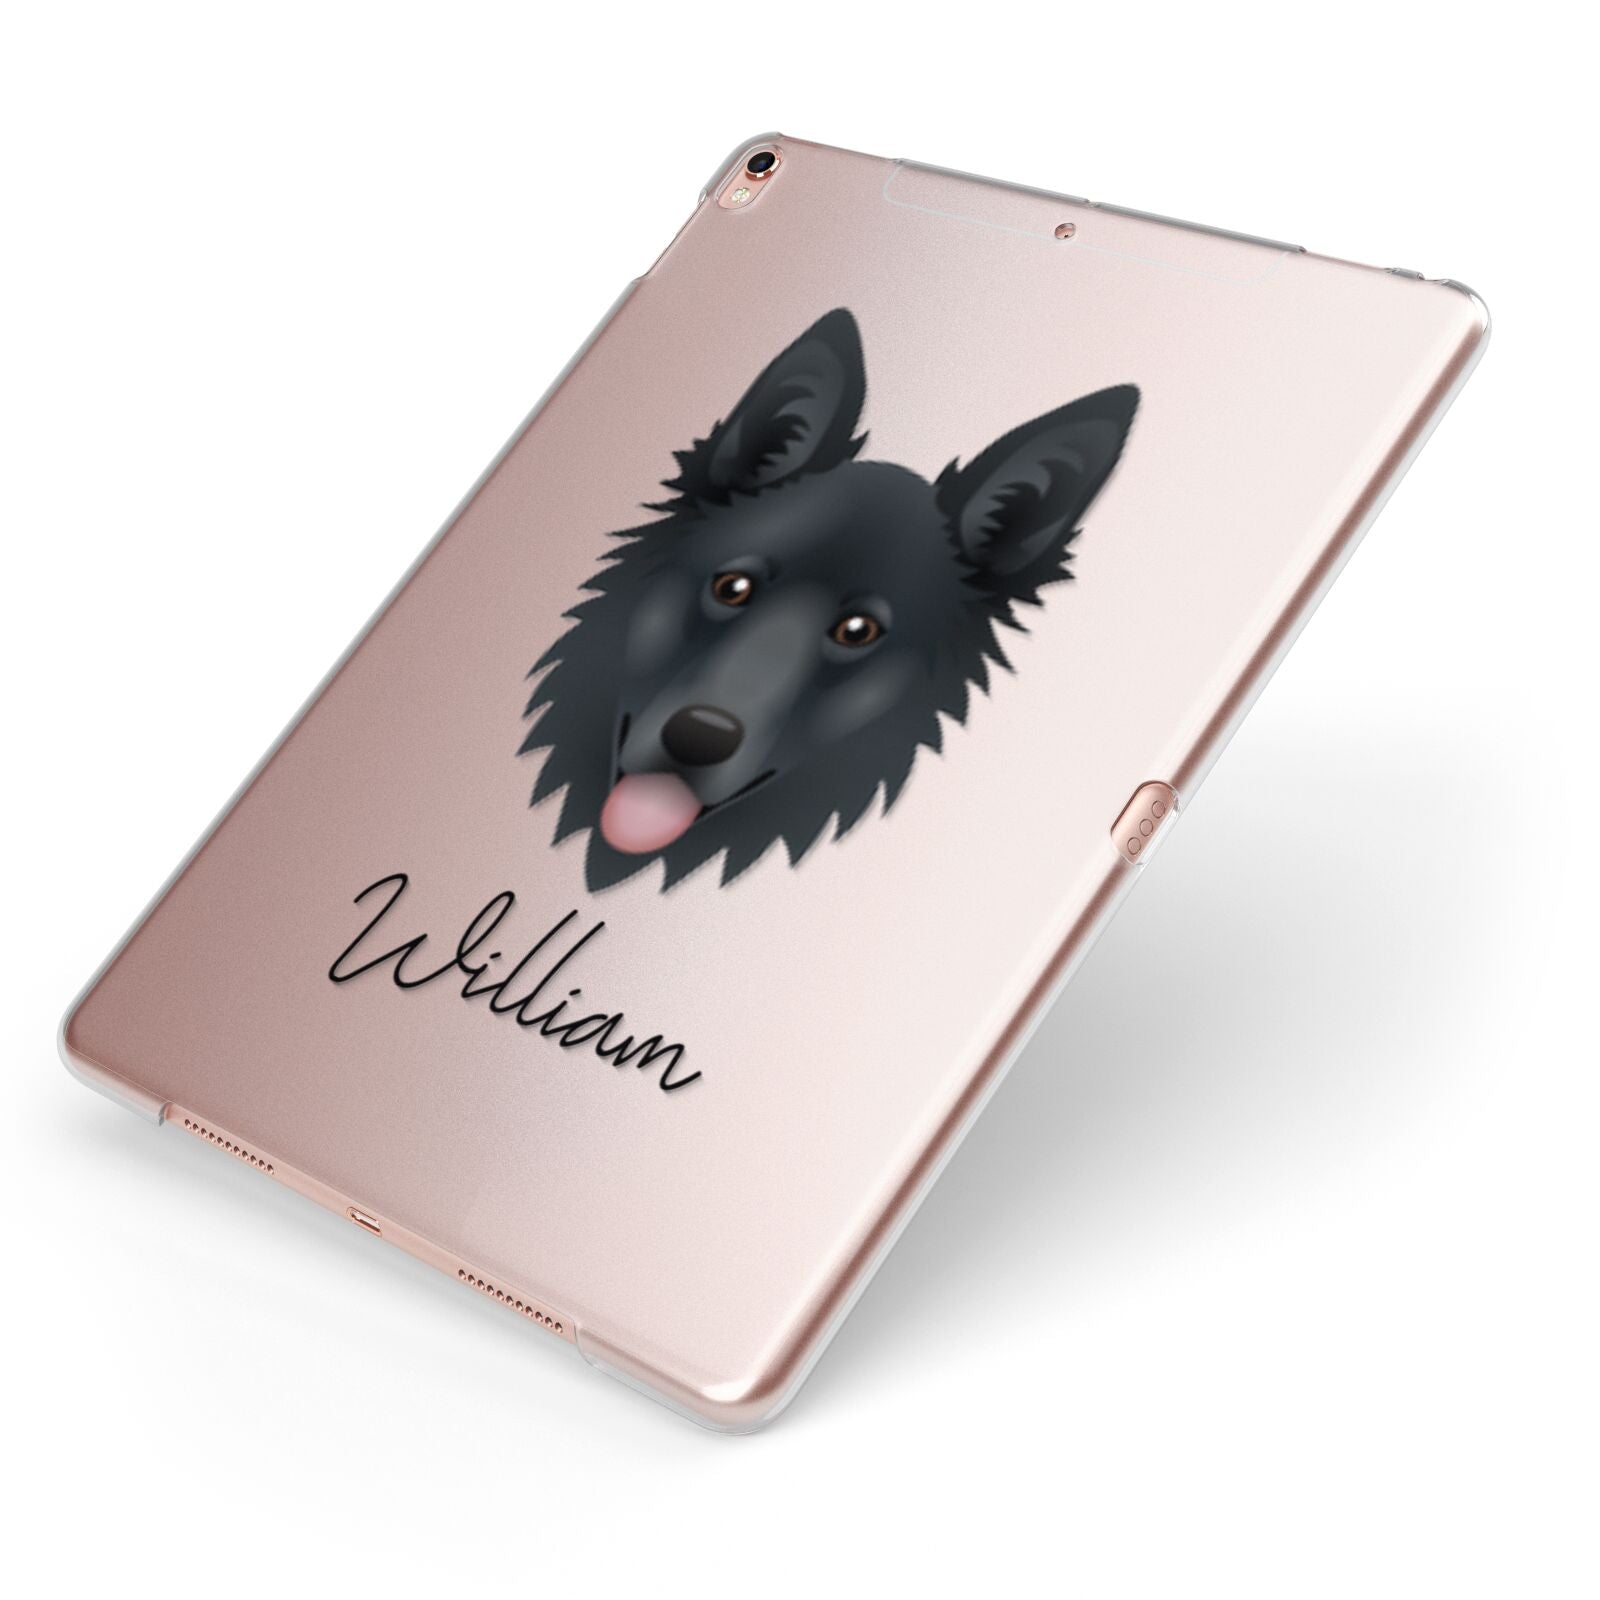 Golden Shepherd Personalised Apple iPad Case on Rose Gold iPad Side View